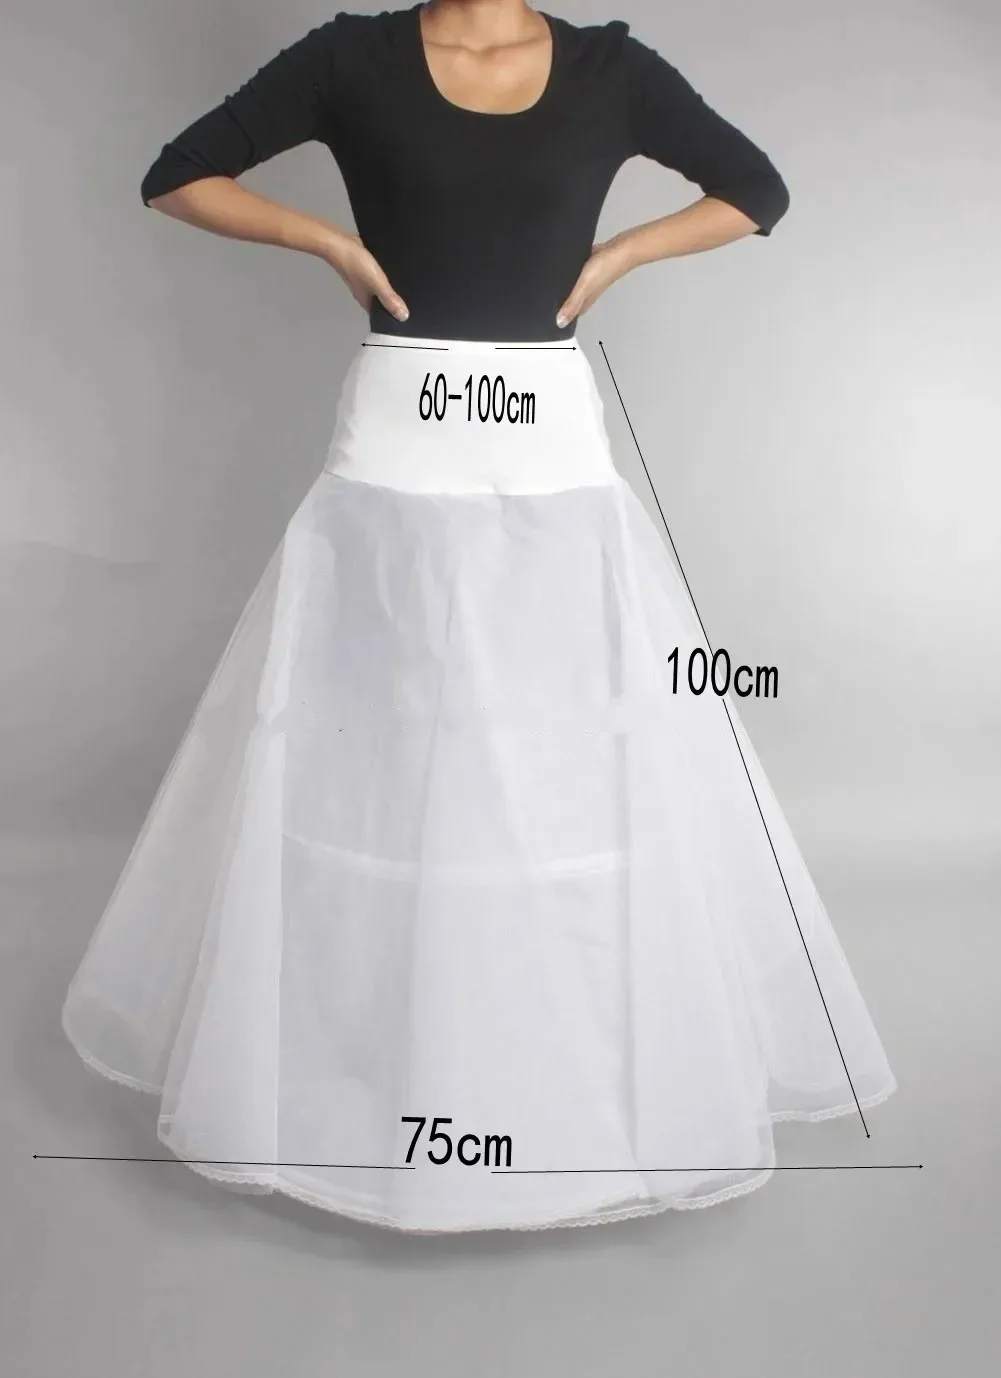 6 Rings Puffy Petticoat For Wedding Dress Ball Gown Mermaid A-Line Dresses Elastic Band Adjustable Waist Crinoline Underskirt